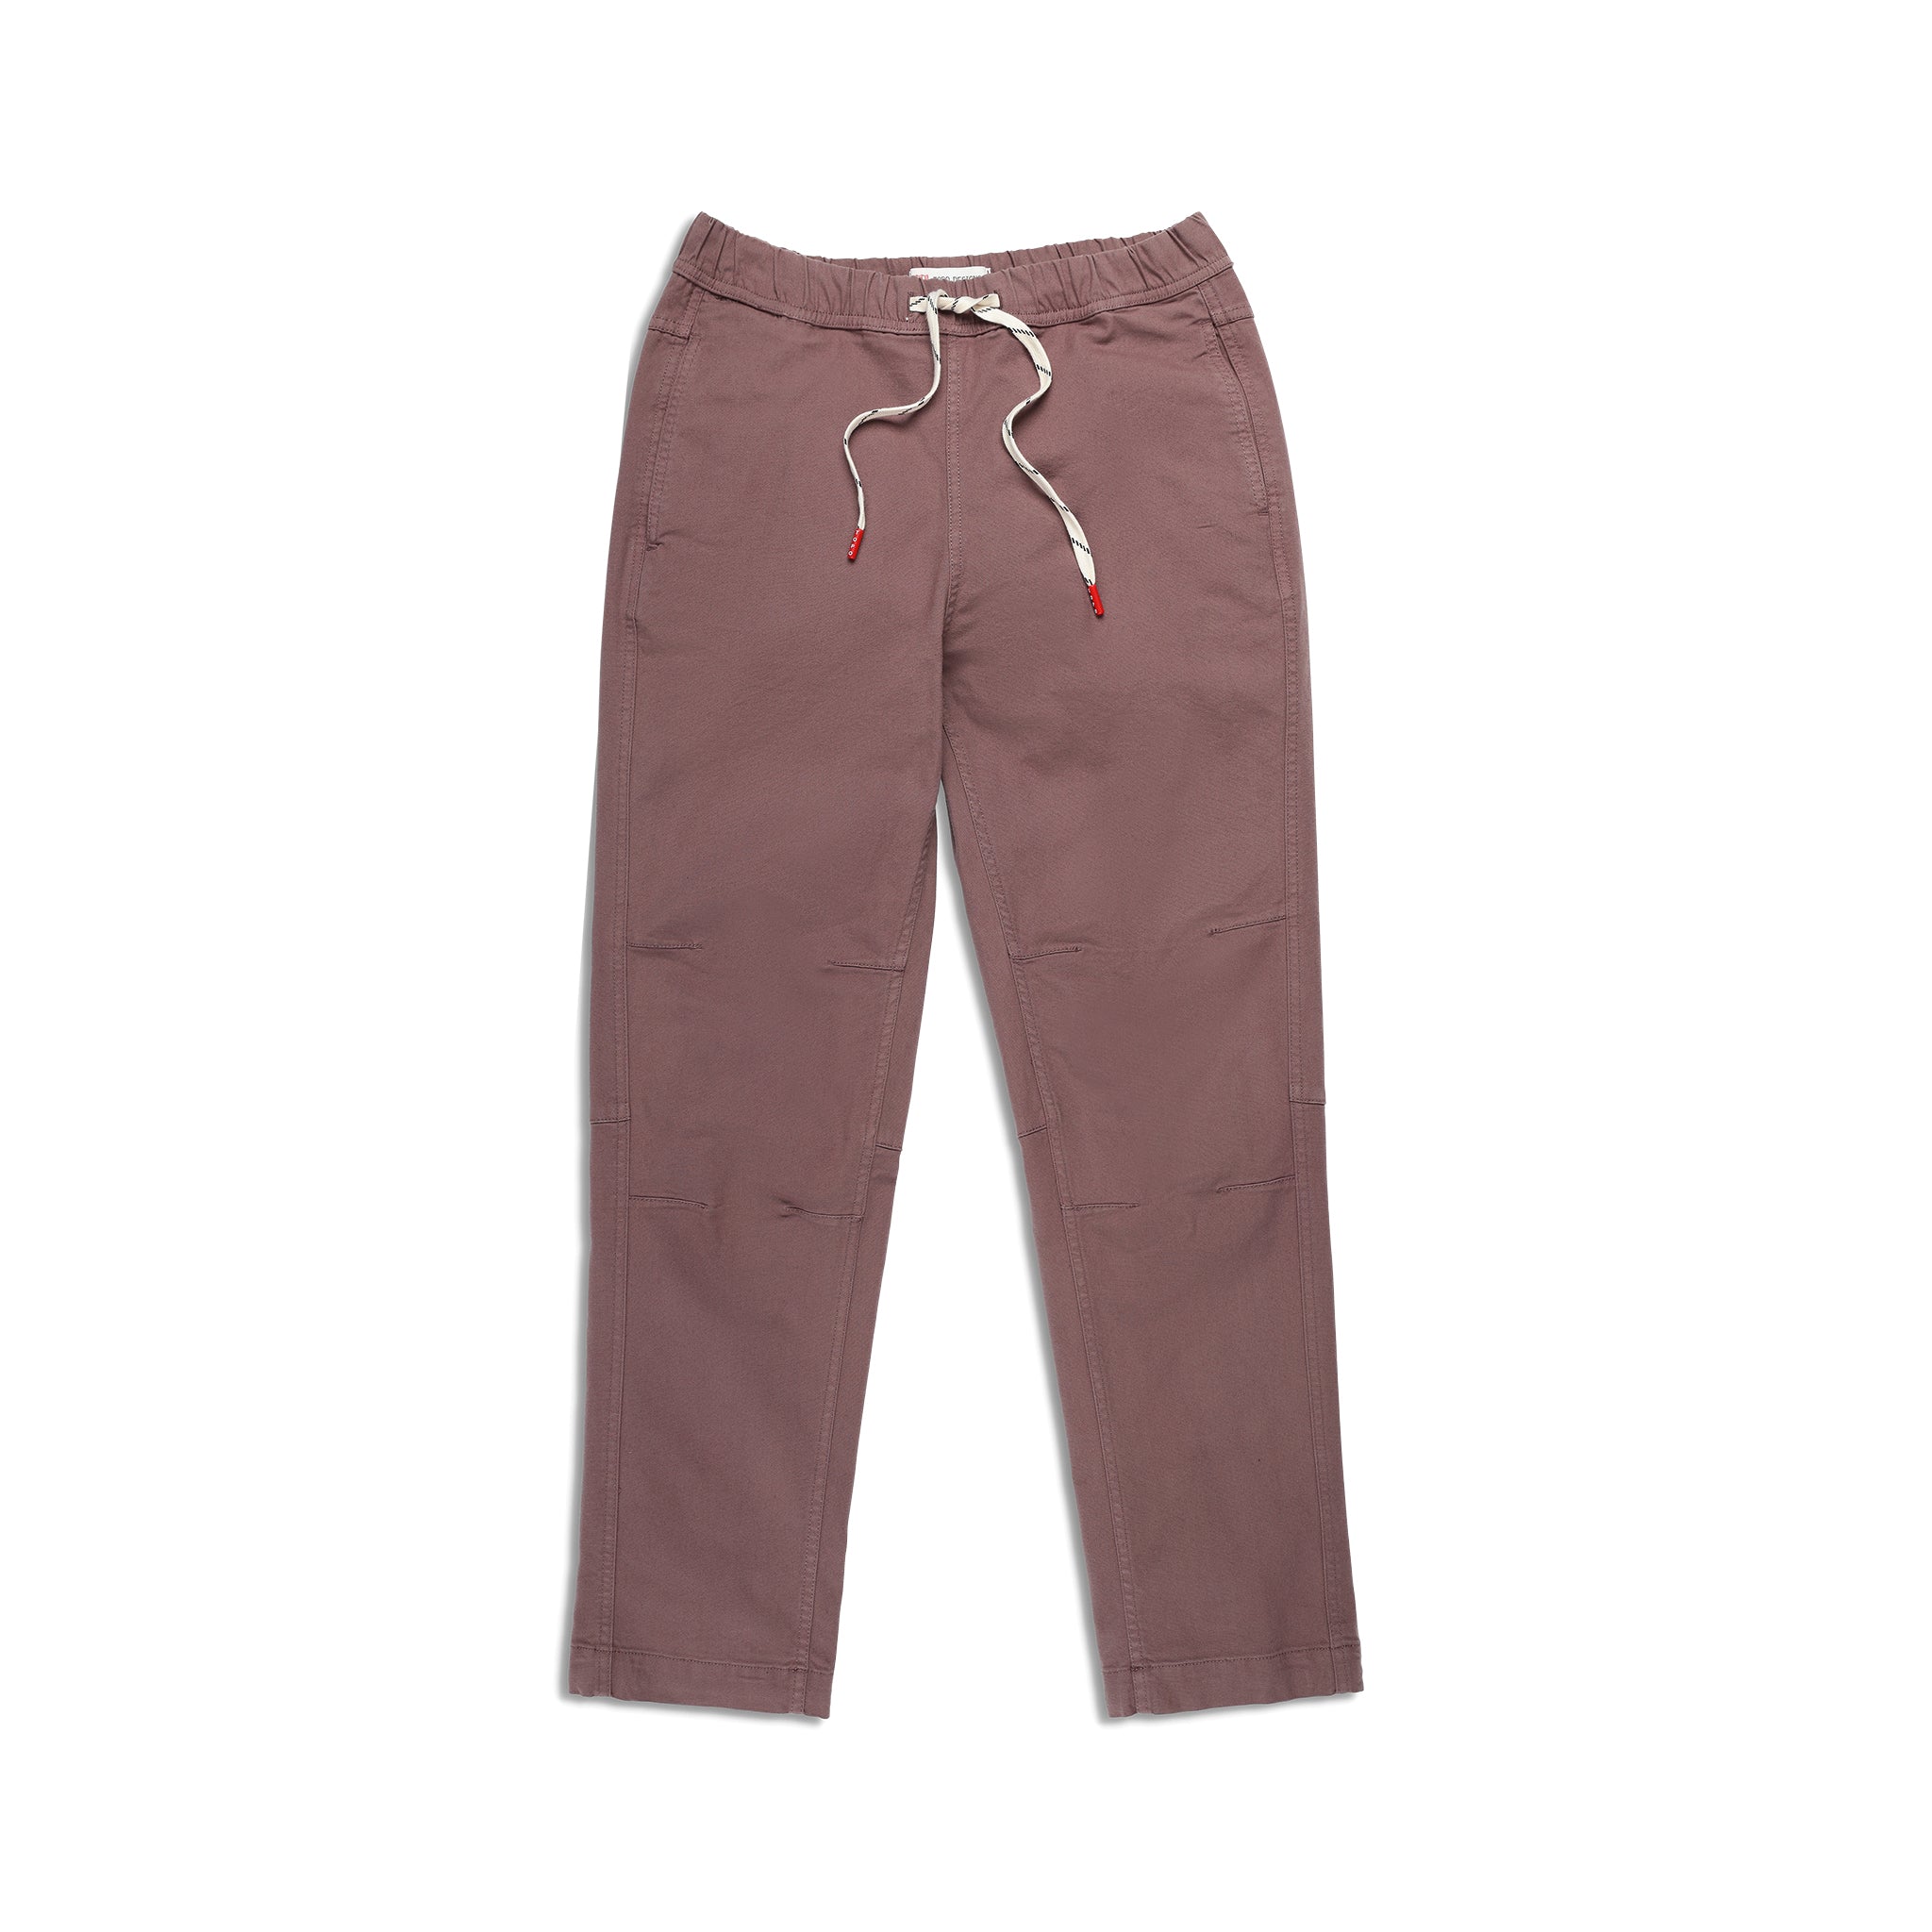 Buy Men's Urban Fit Cotton Stretch Trouser Online | Indian Terrain